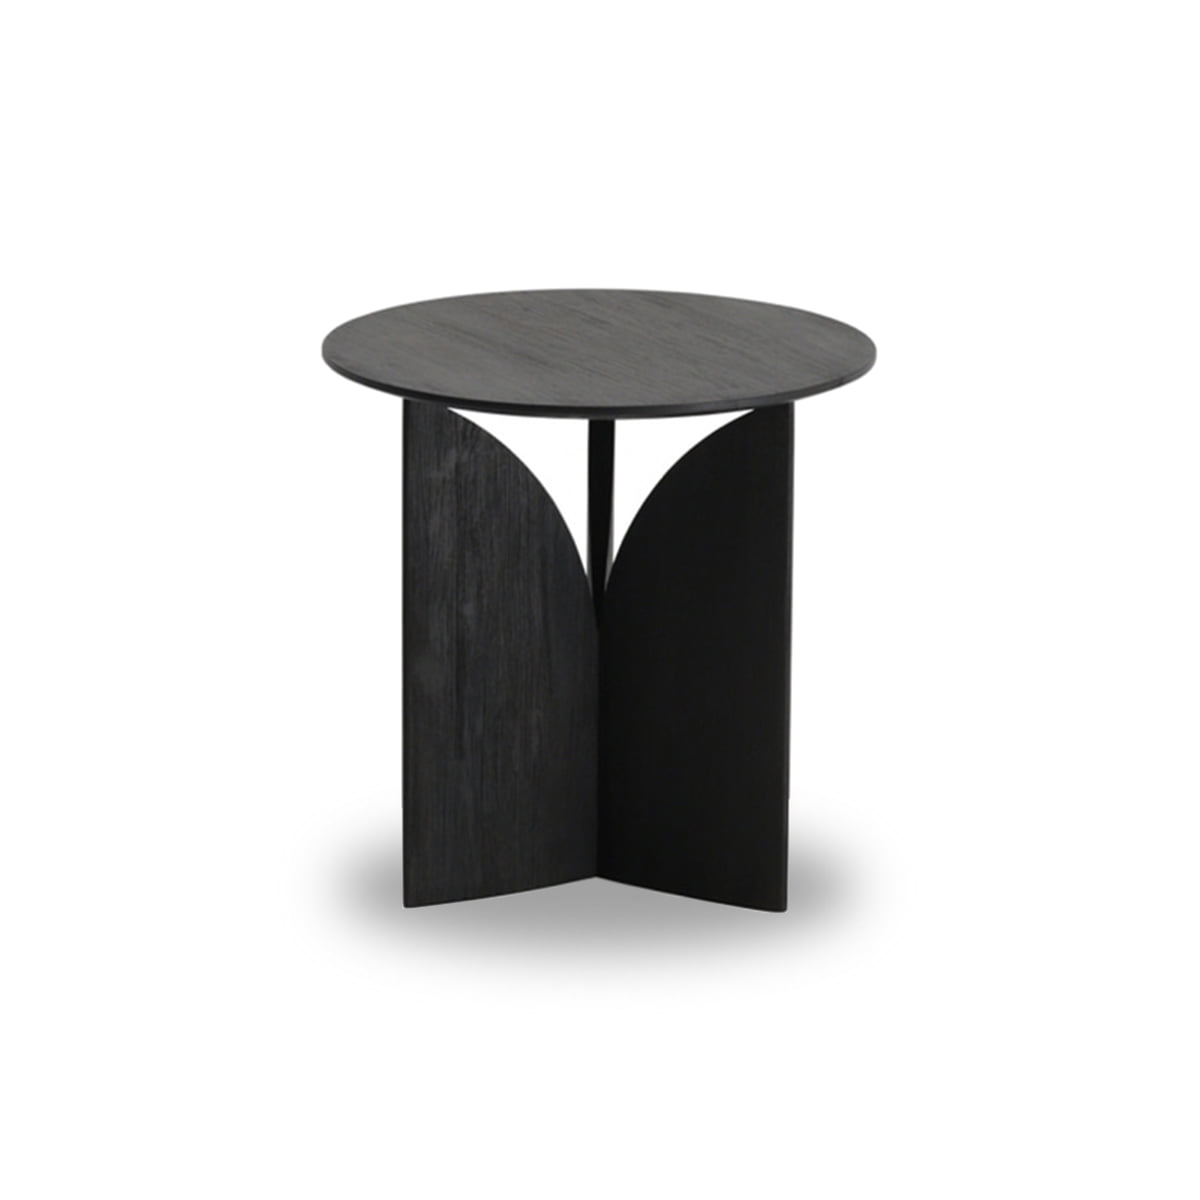 ETHNICRAFT Teak Fin Side Table 에쓰니크래프트 티크 핀 사이드 테이블